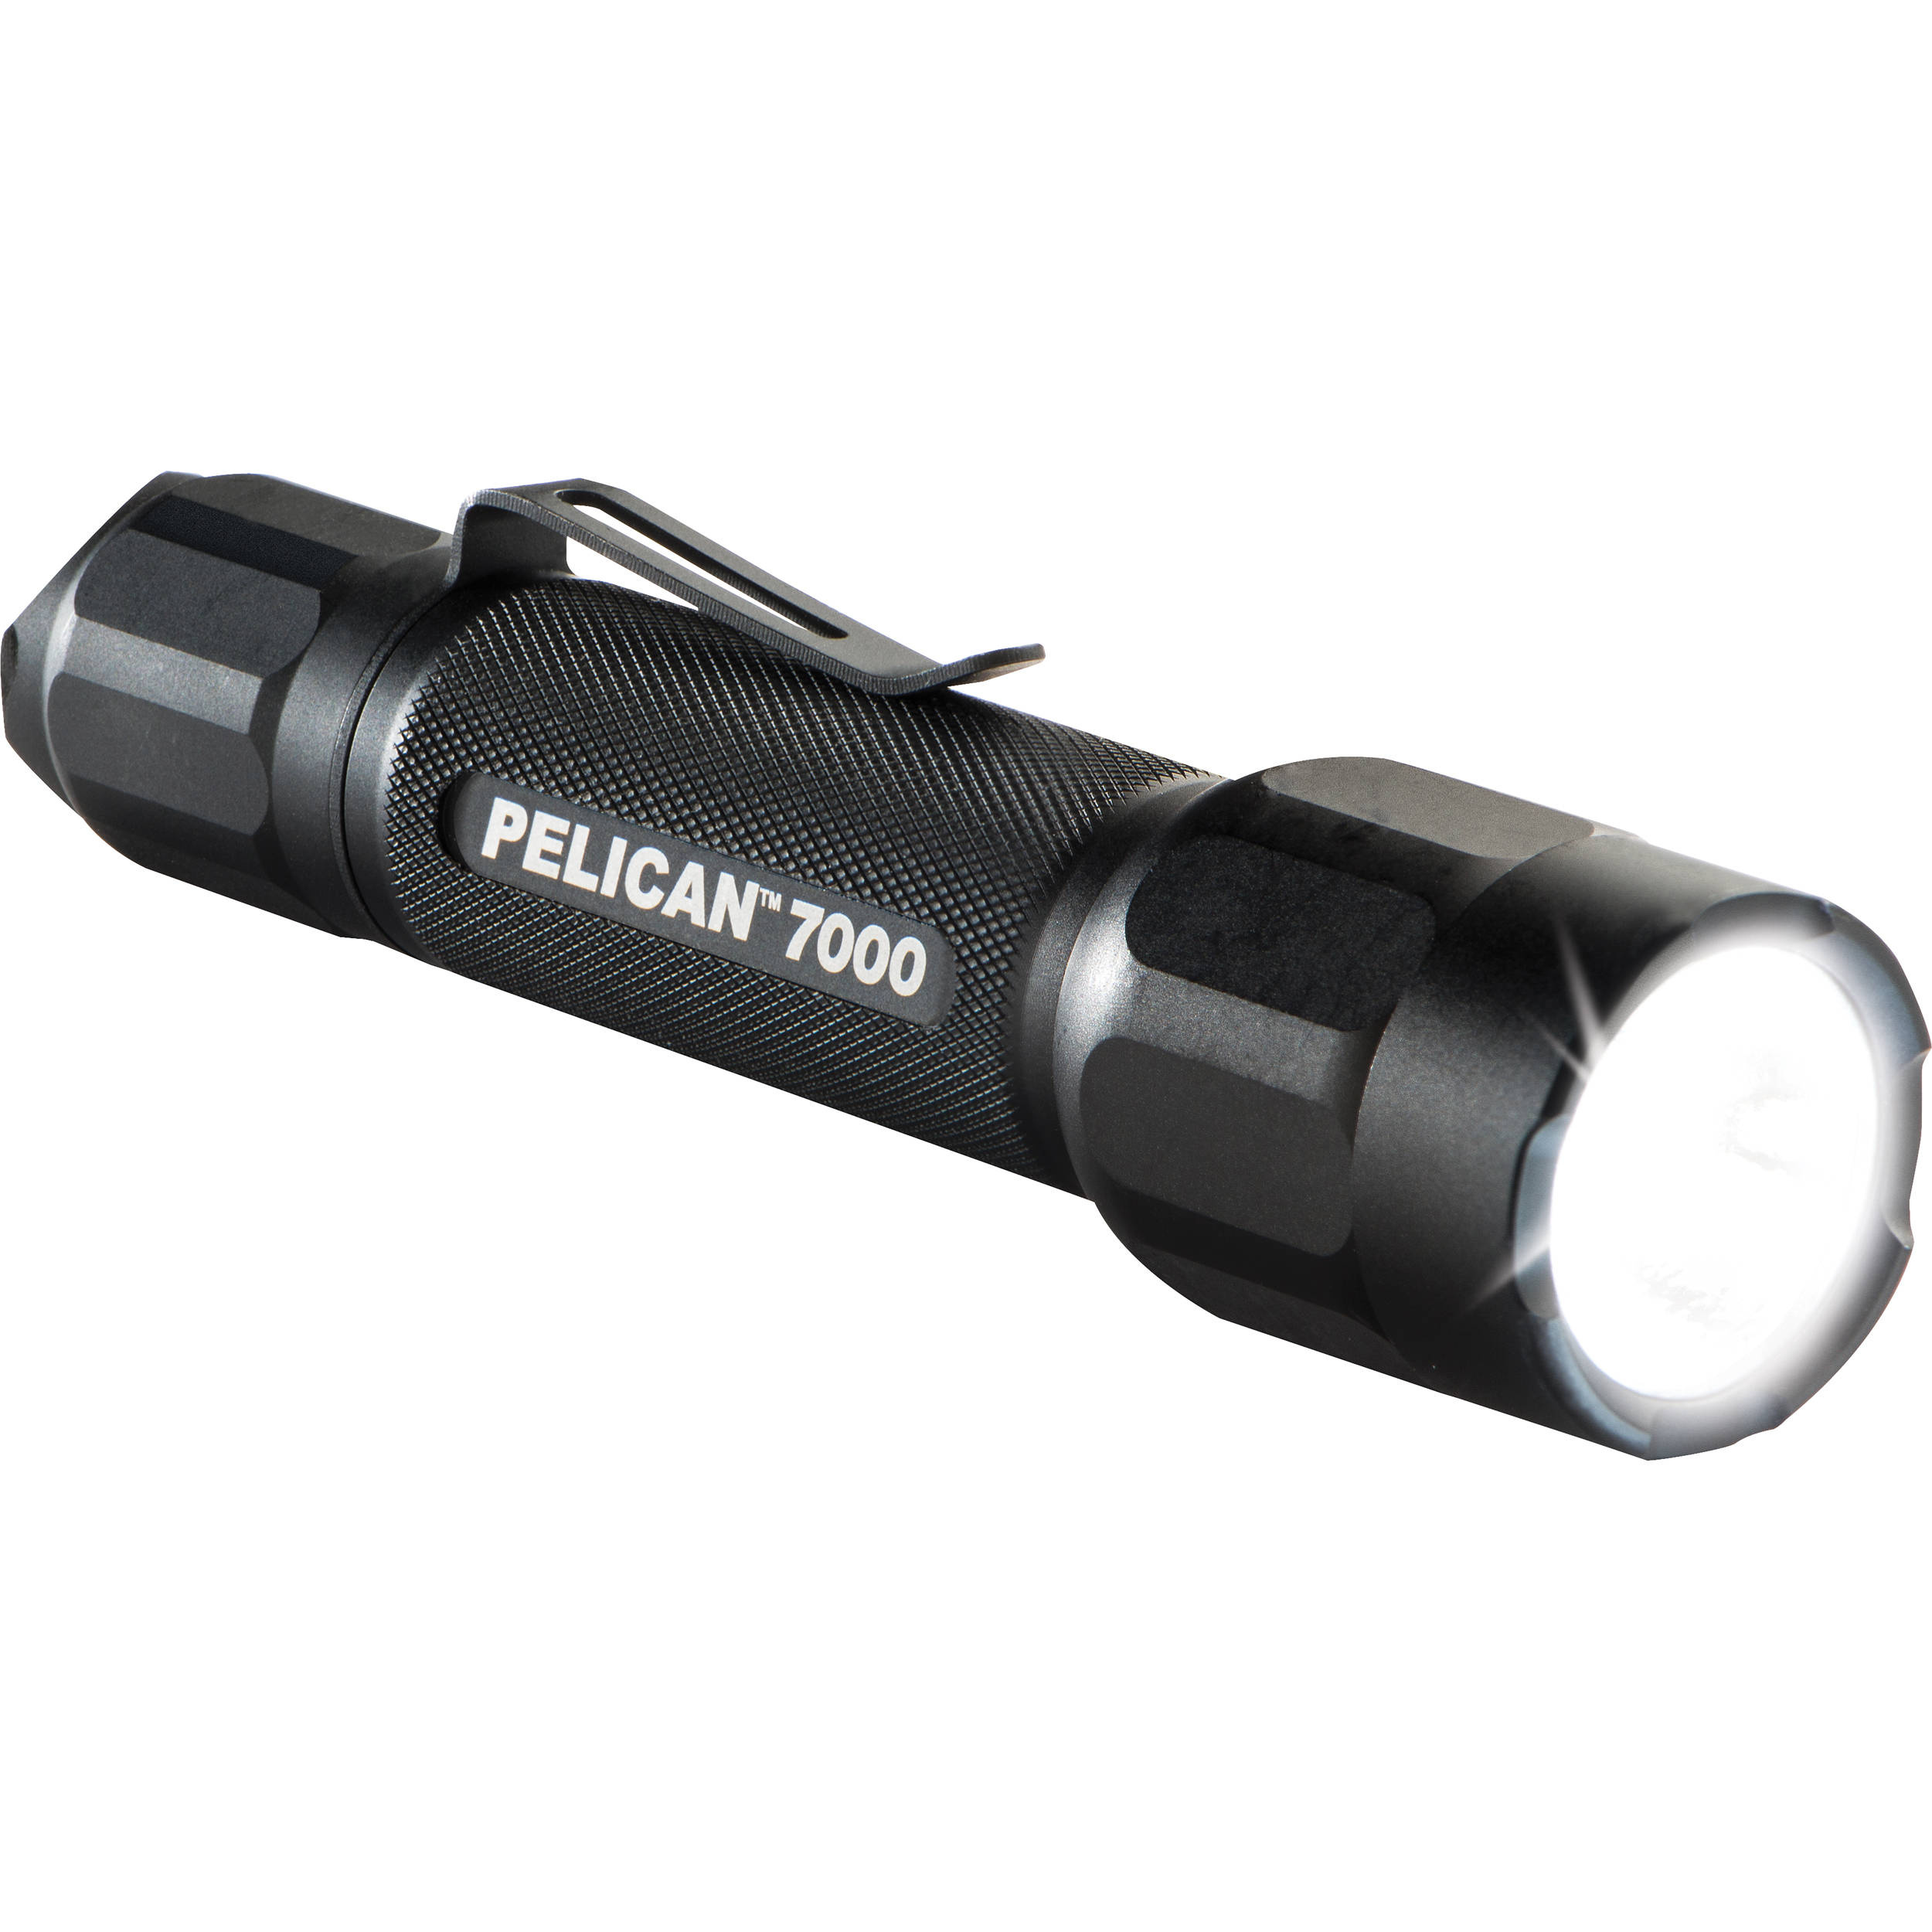 Pelican 7000 LED Flashlight (Black)